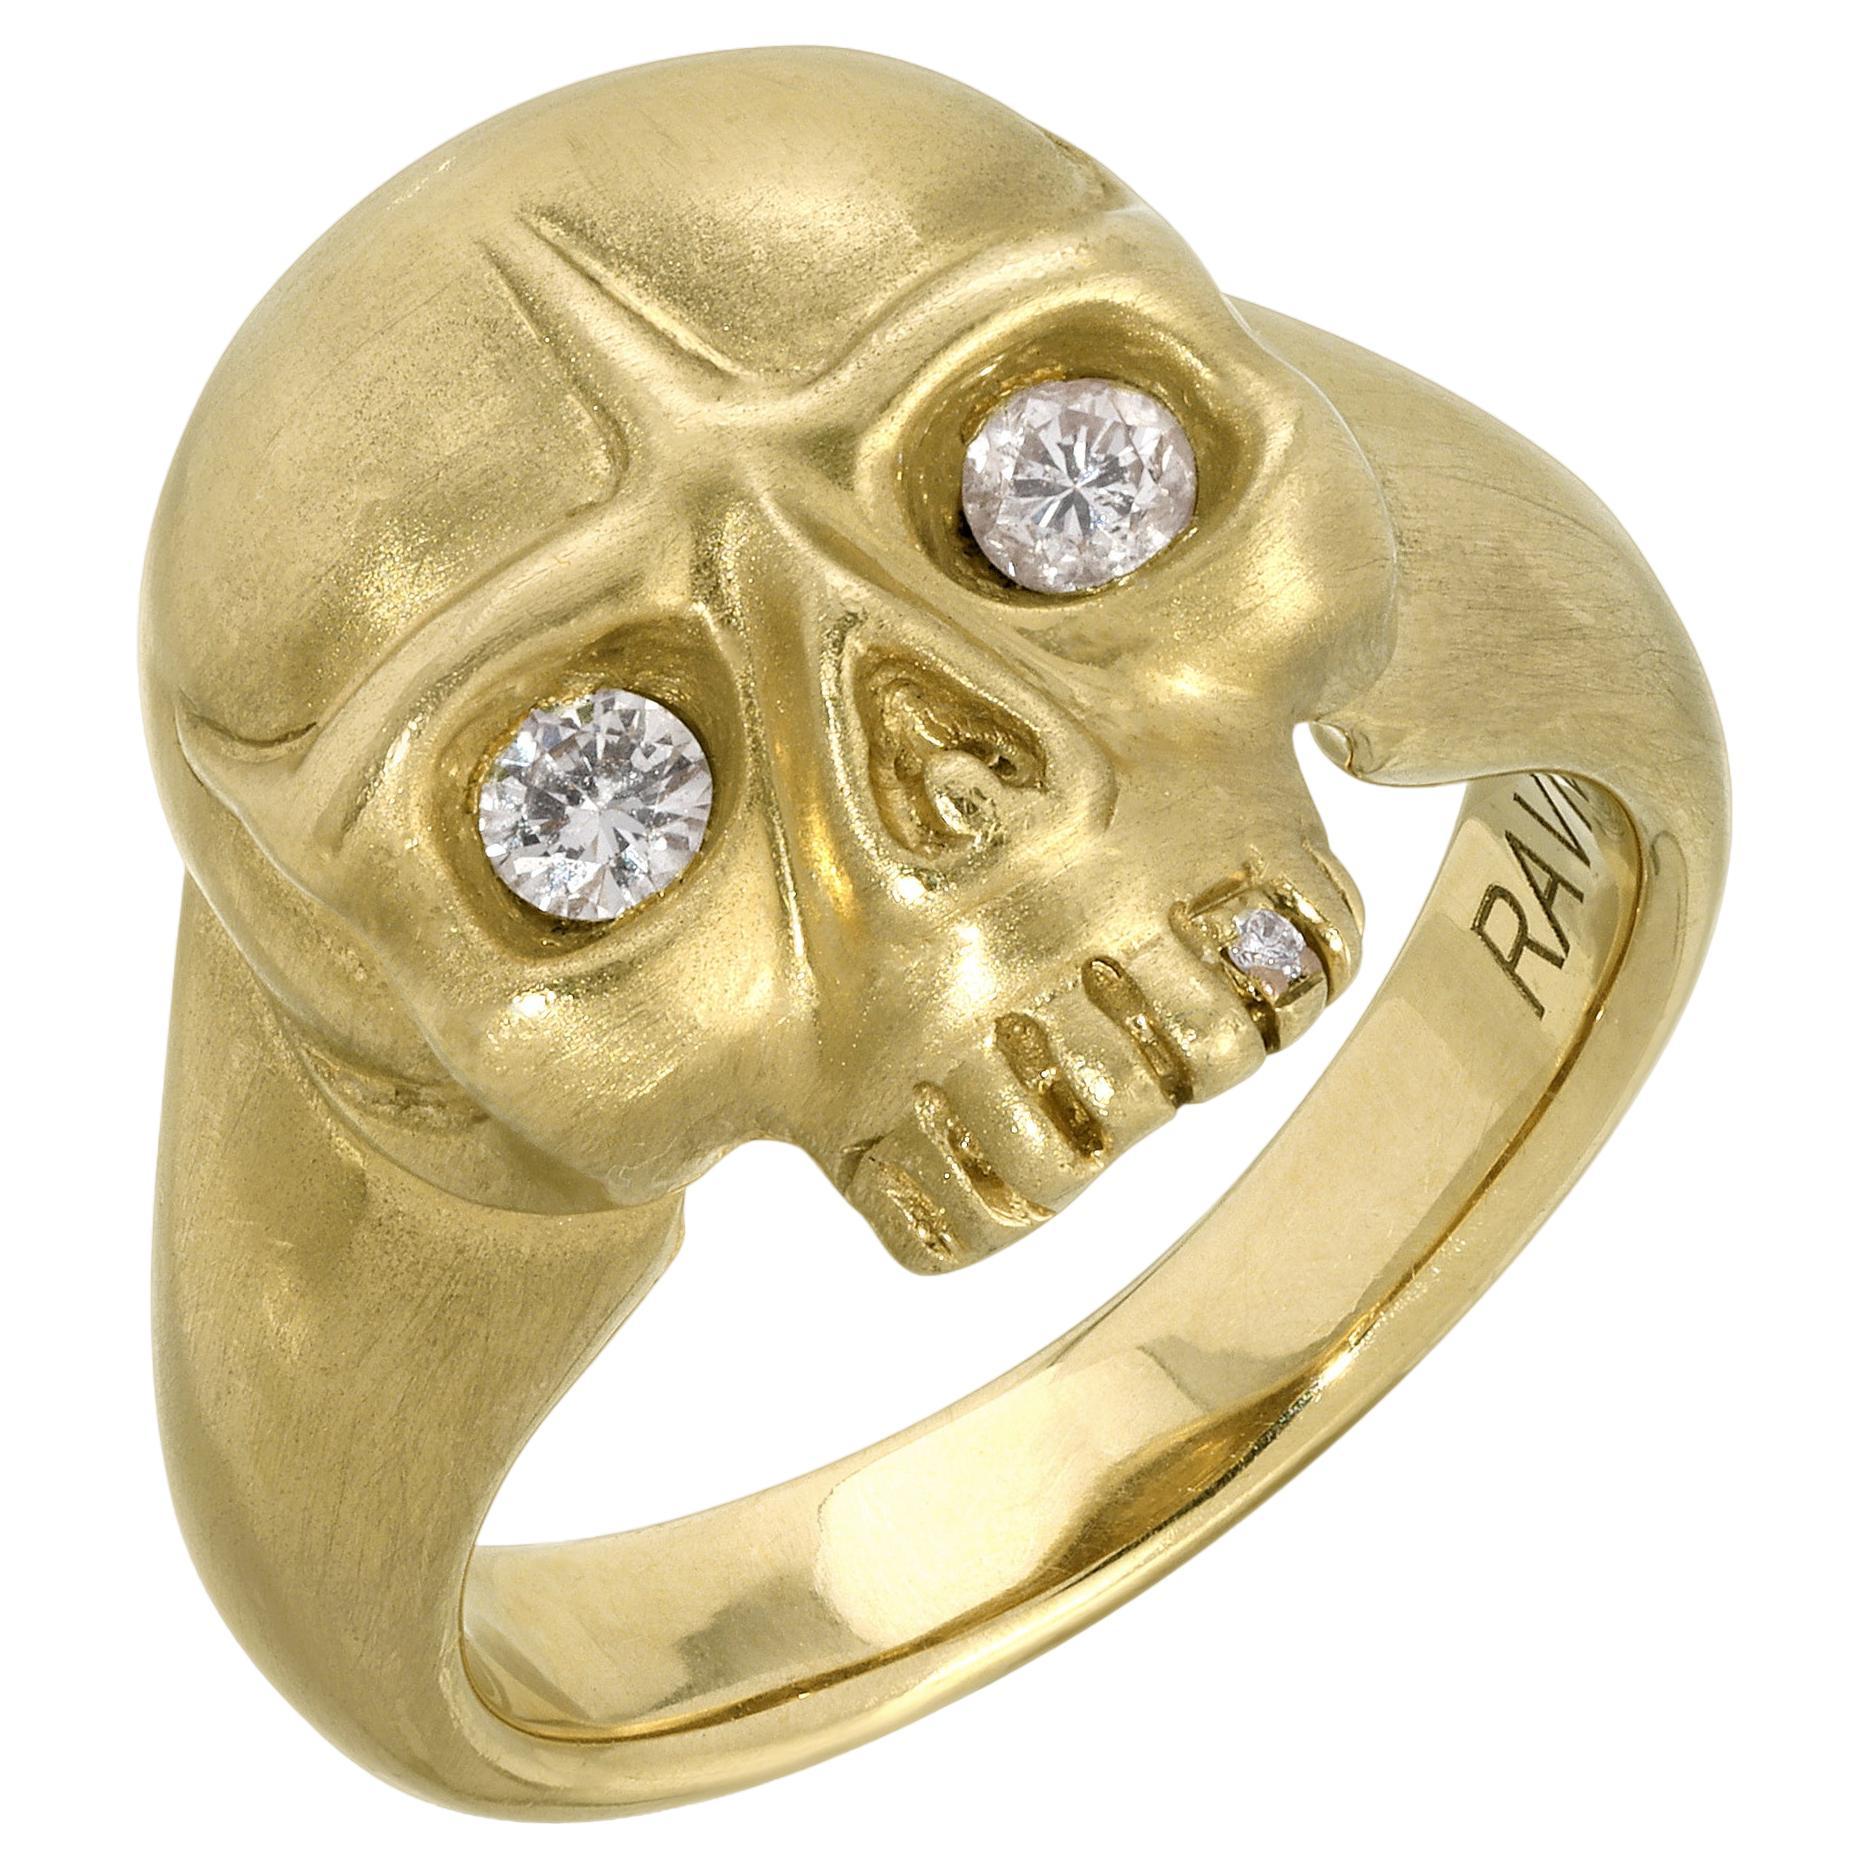 House of RAVN, 14k Gold Hand Carved Petite Skull Ring with Diamond Eyes